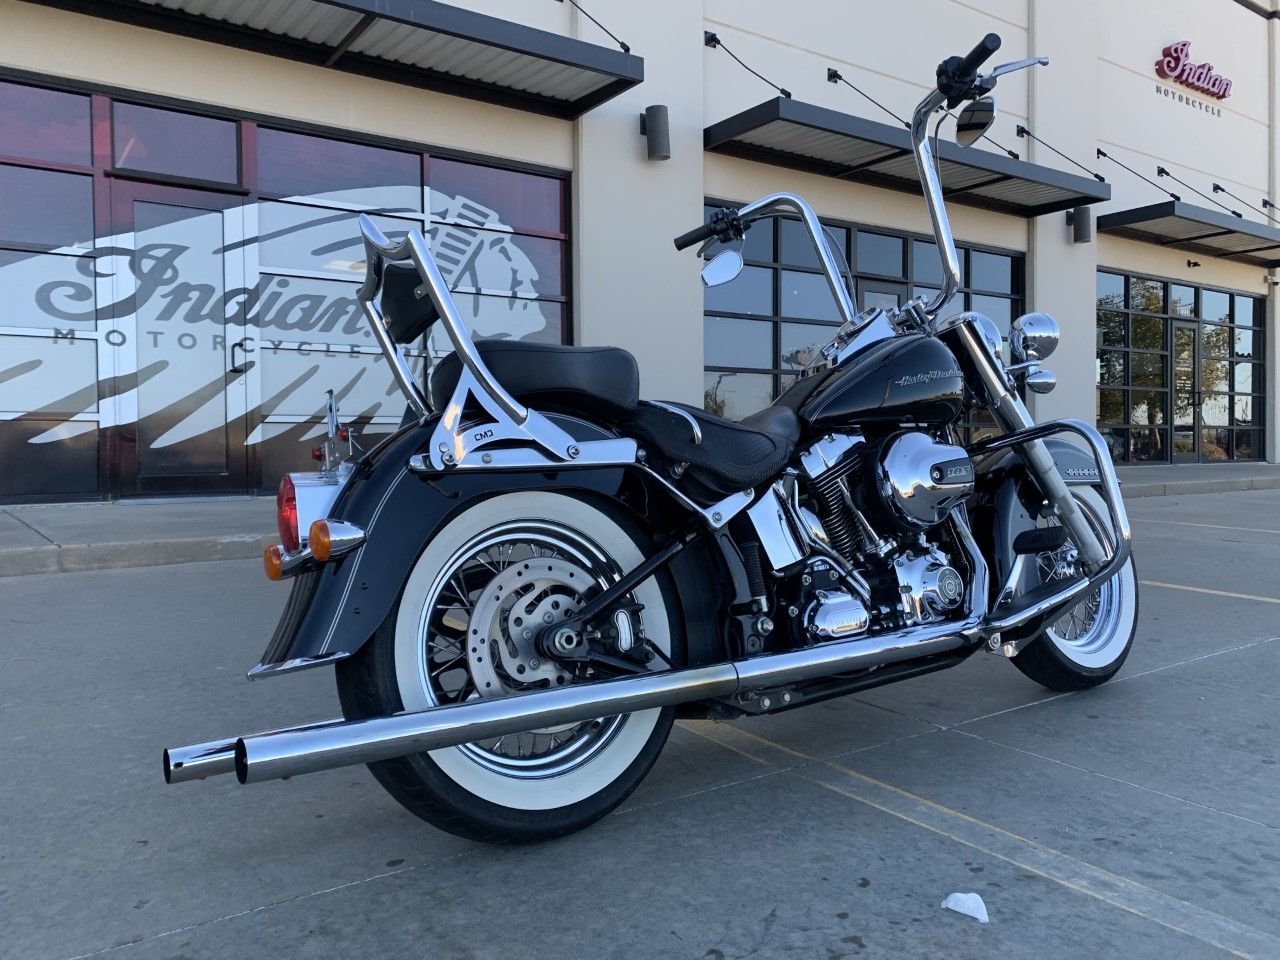 2017 Harley-Davidson Softail® Deluxe in Norman, Oklahoma - Photo 8